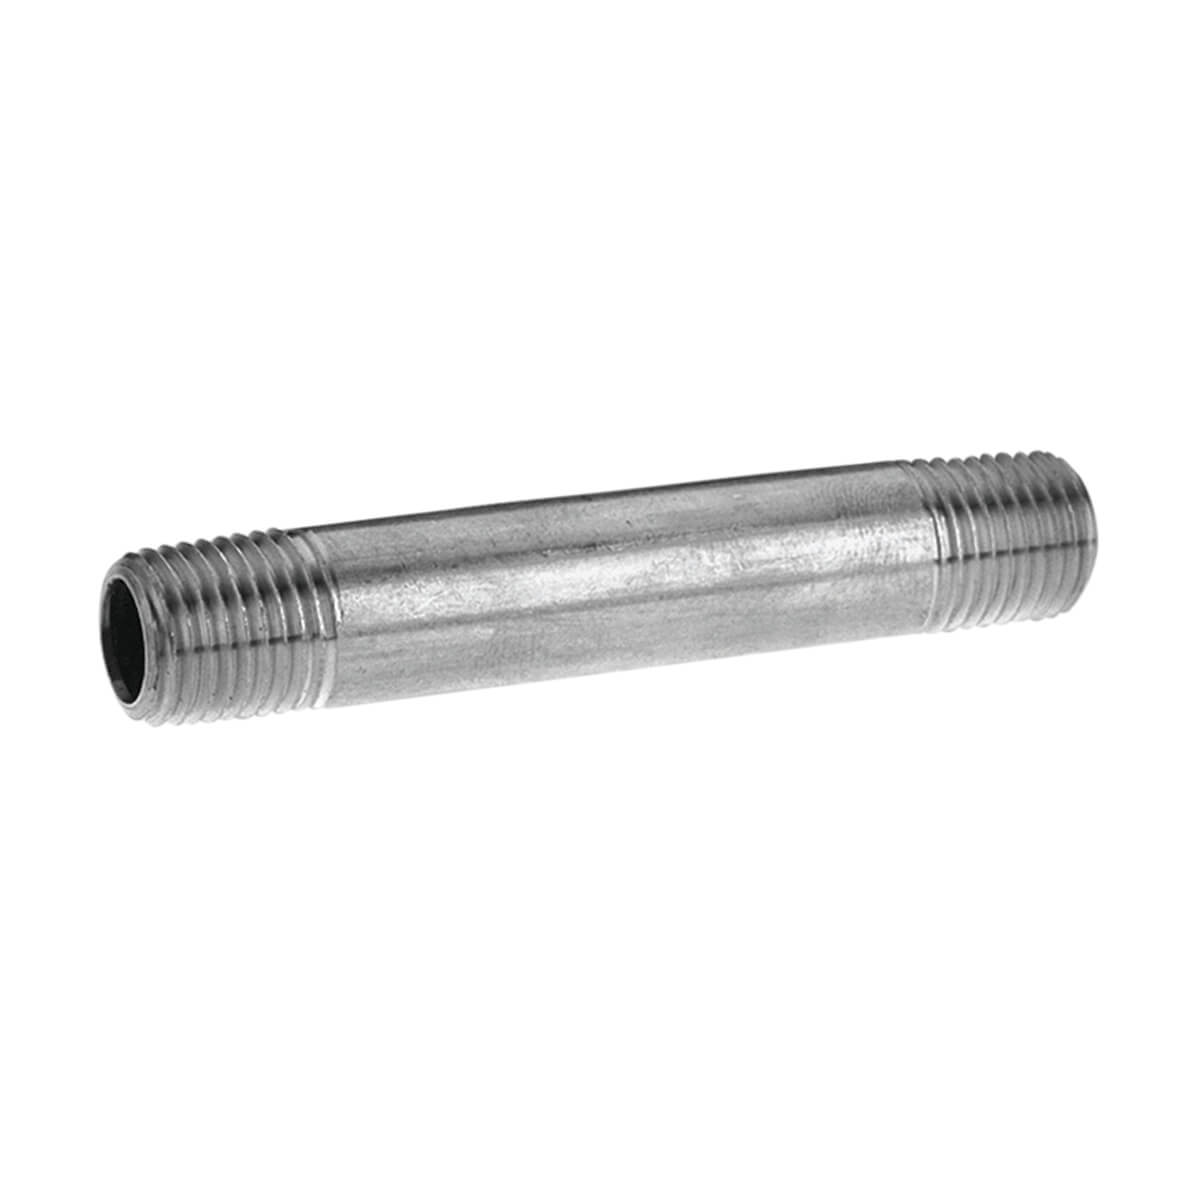 Pipe Nipple Galvanized Steel - 1-in x 2-in